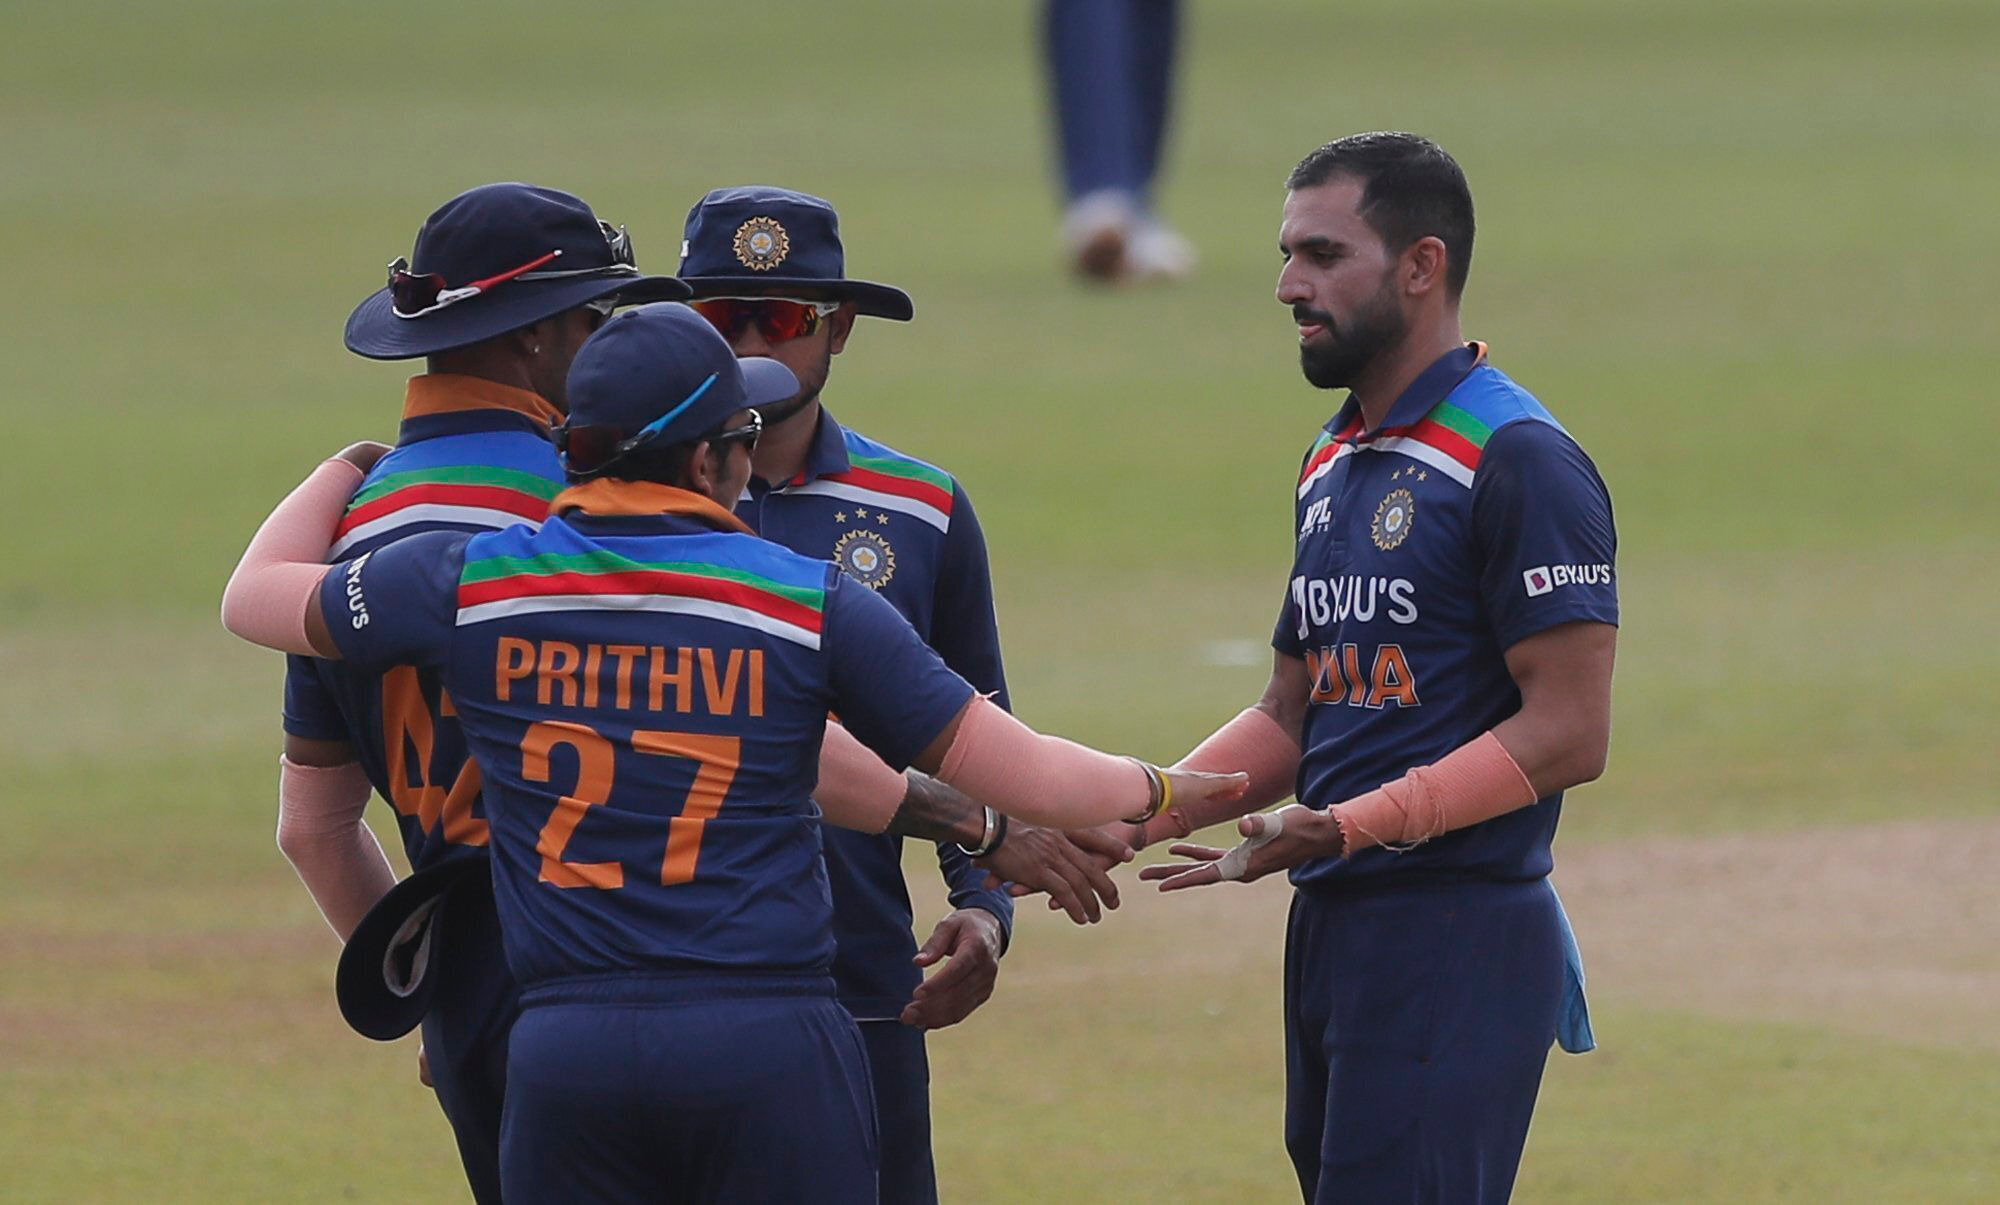 Rahul Dravid hails ‘champion team’ after thrilling victory over Sri Lanka. Watch